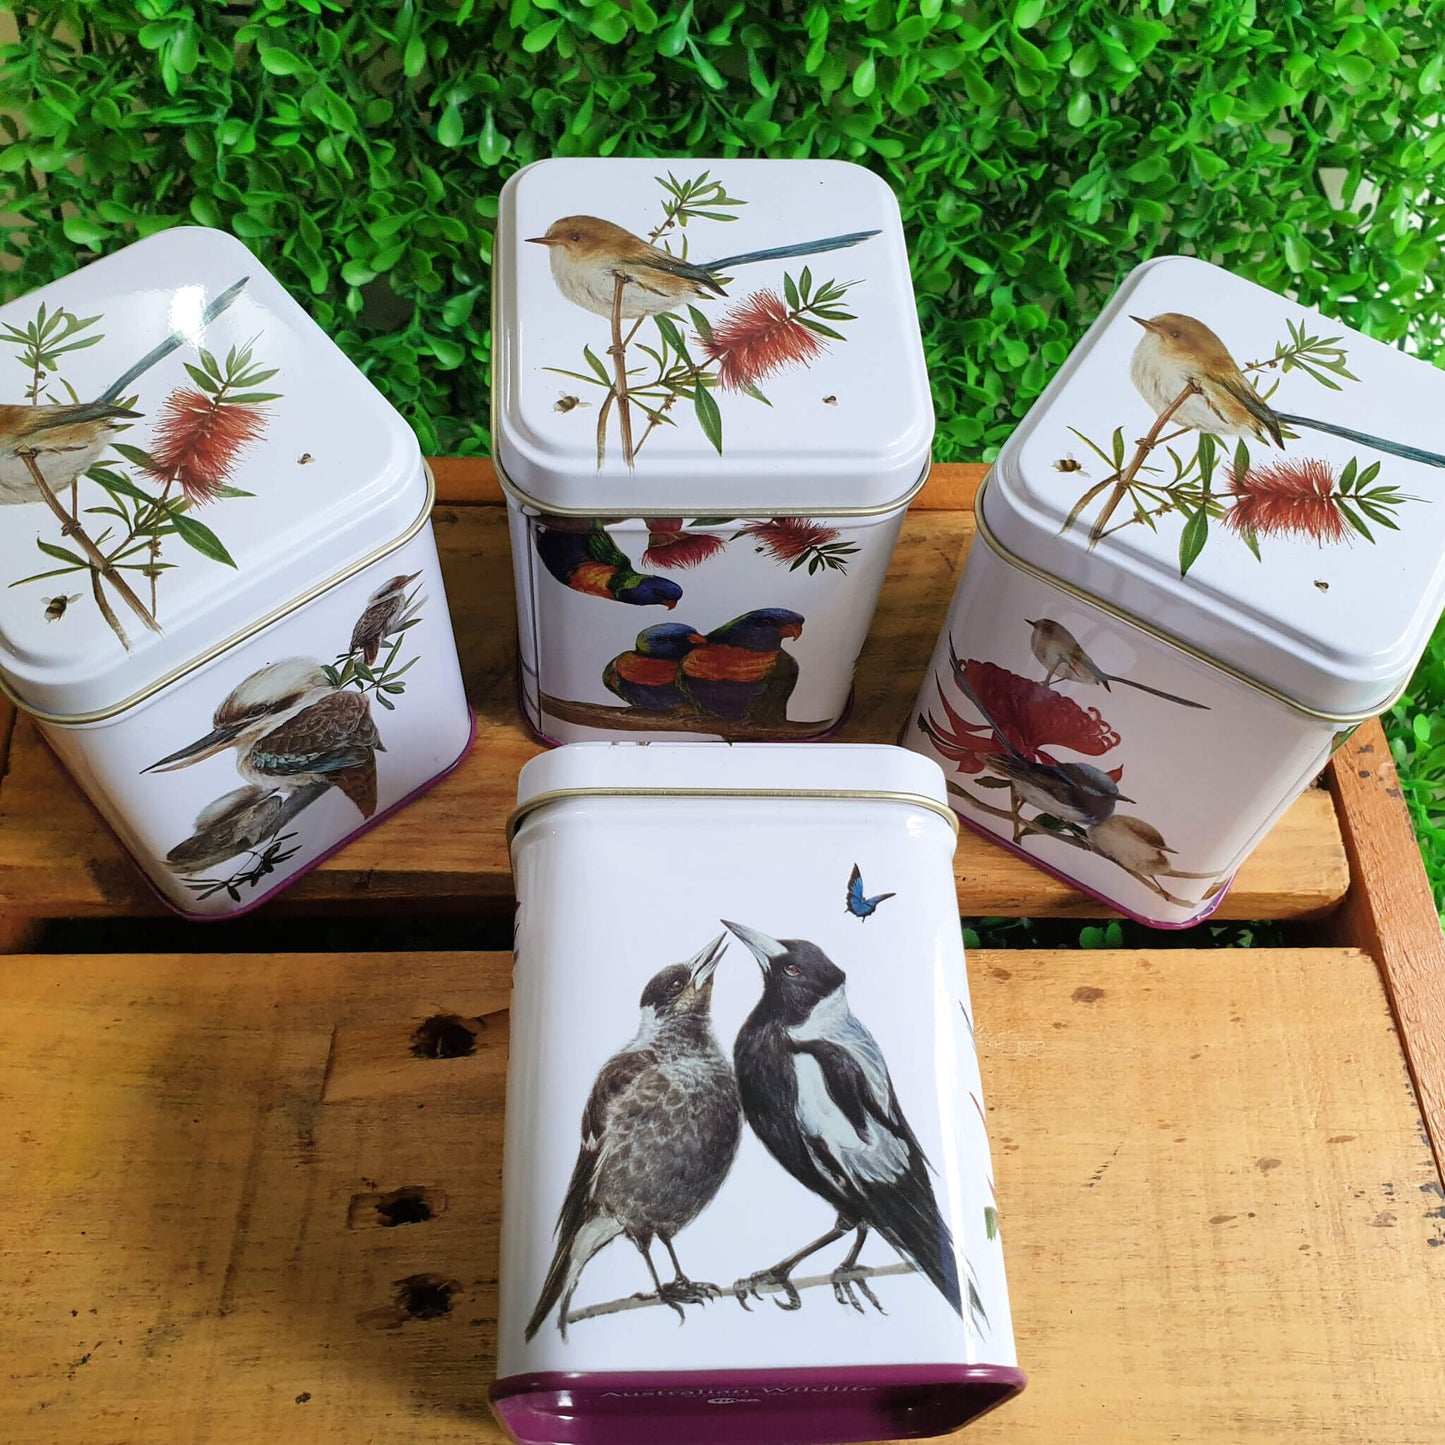 Australian Birds Tea Tin with Magpies, kookaburras 70mm x 70mm x 95mm